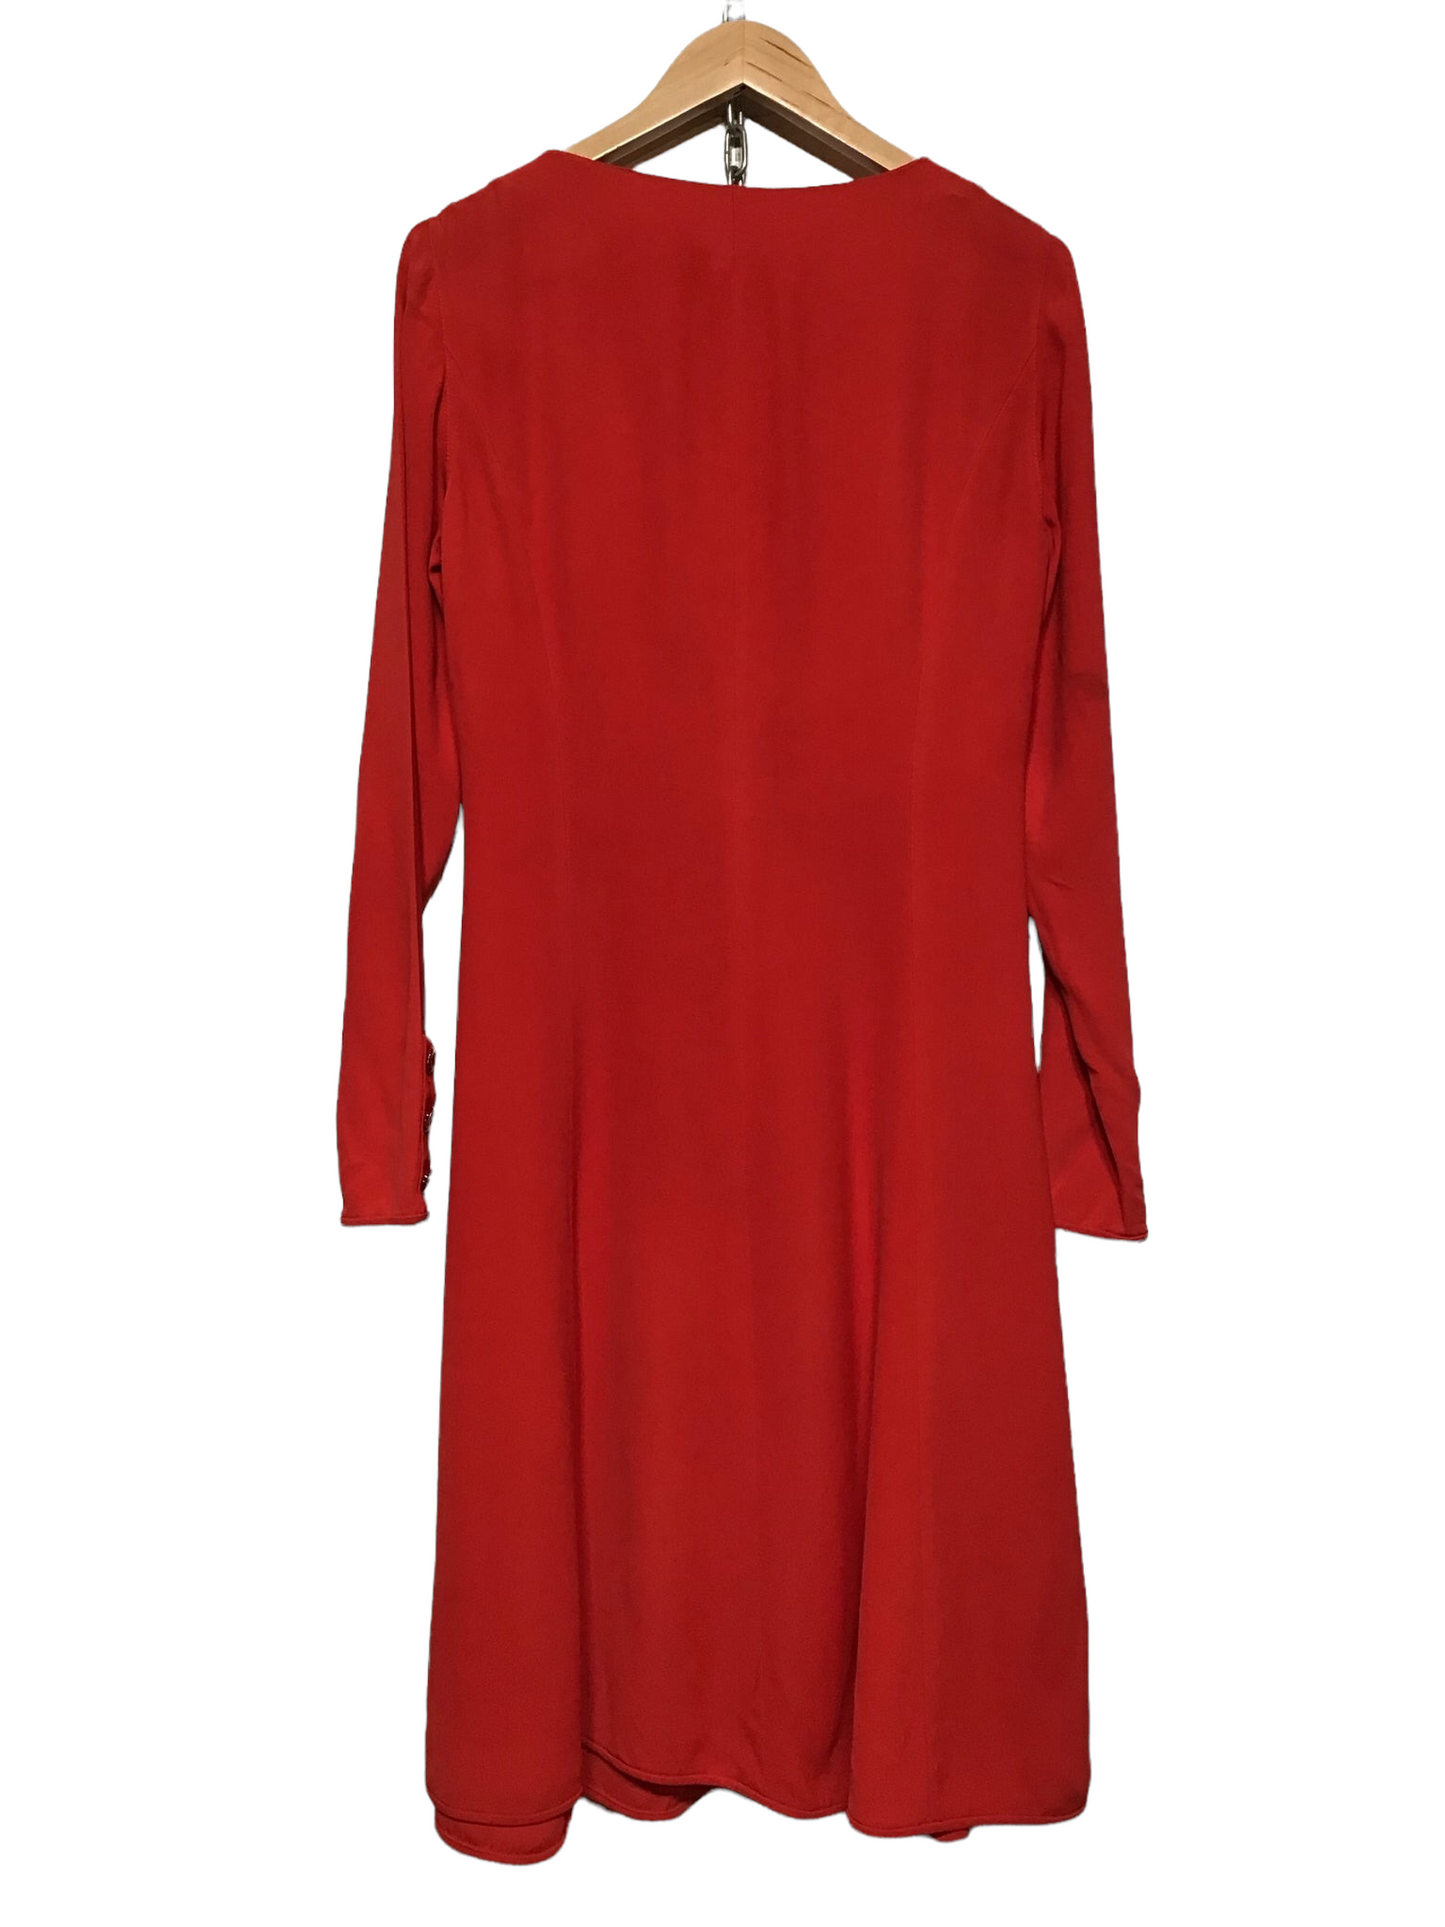 Emanuel Ungaro Red Dress (Size M)